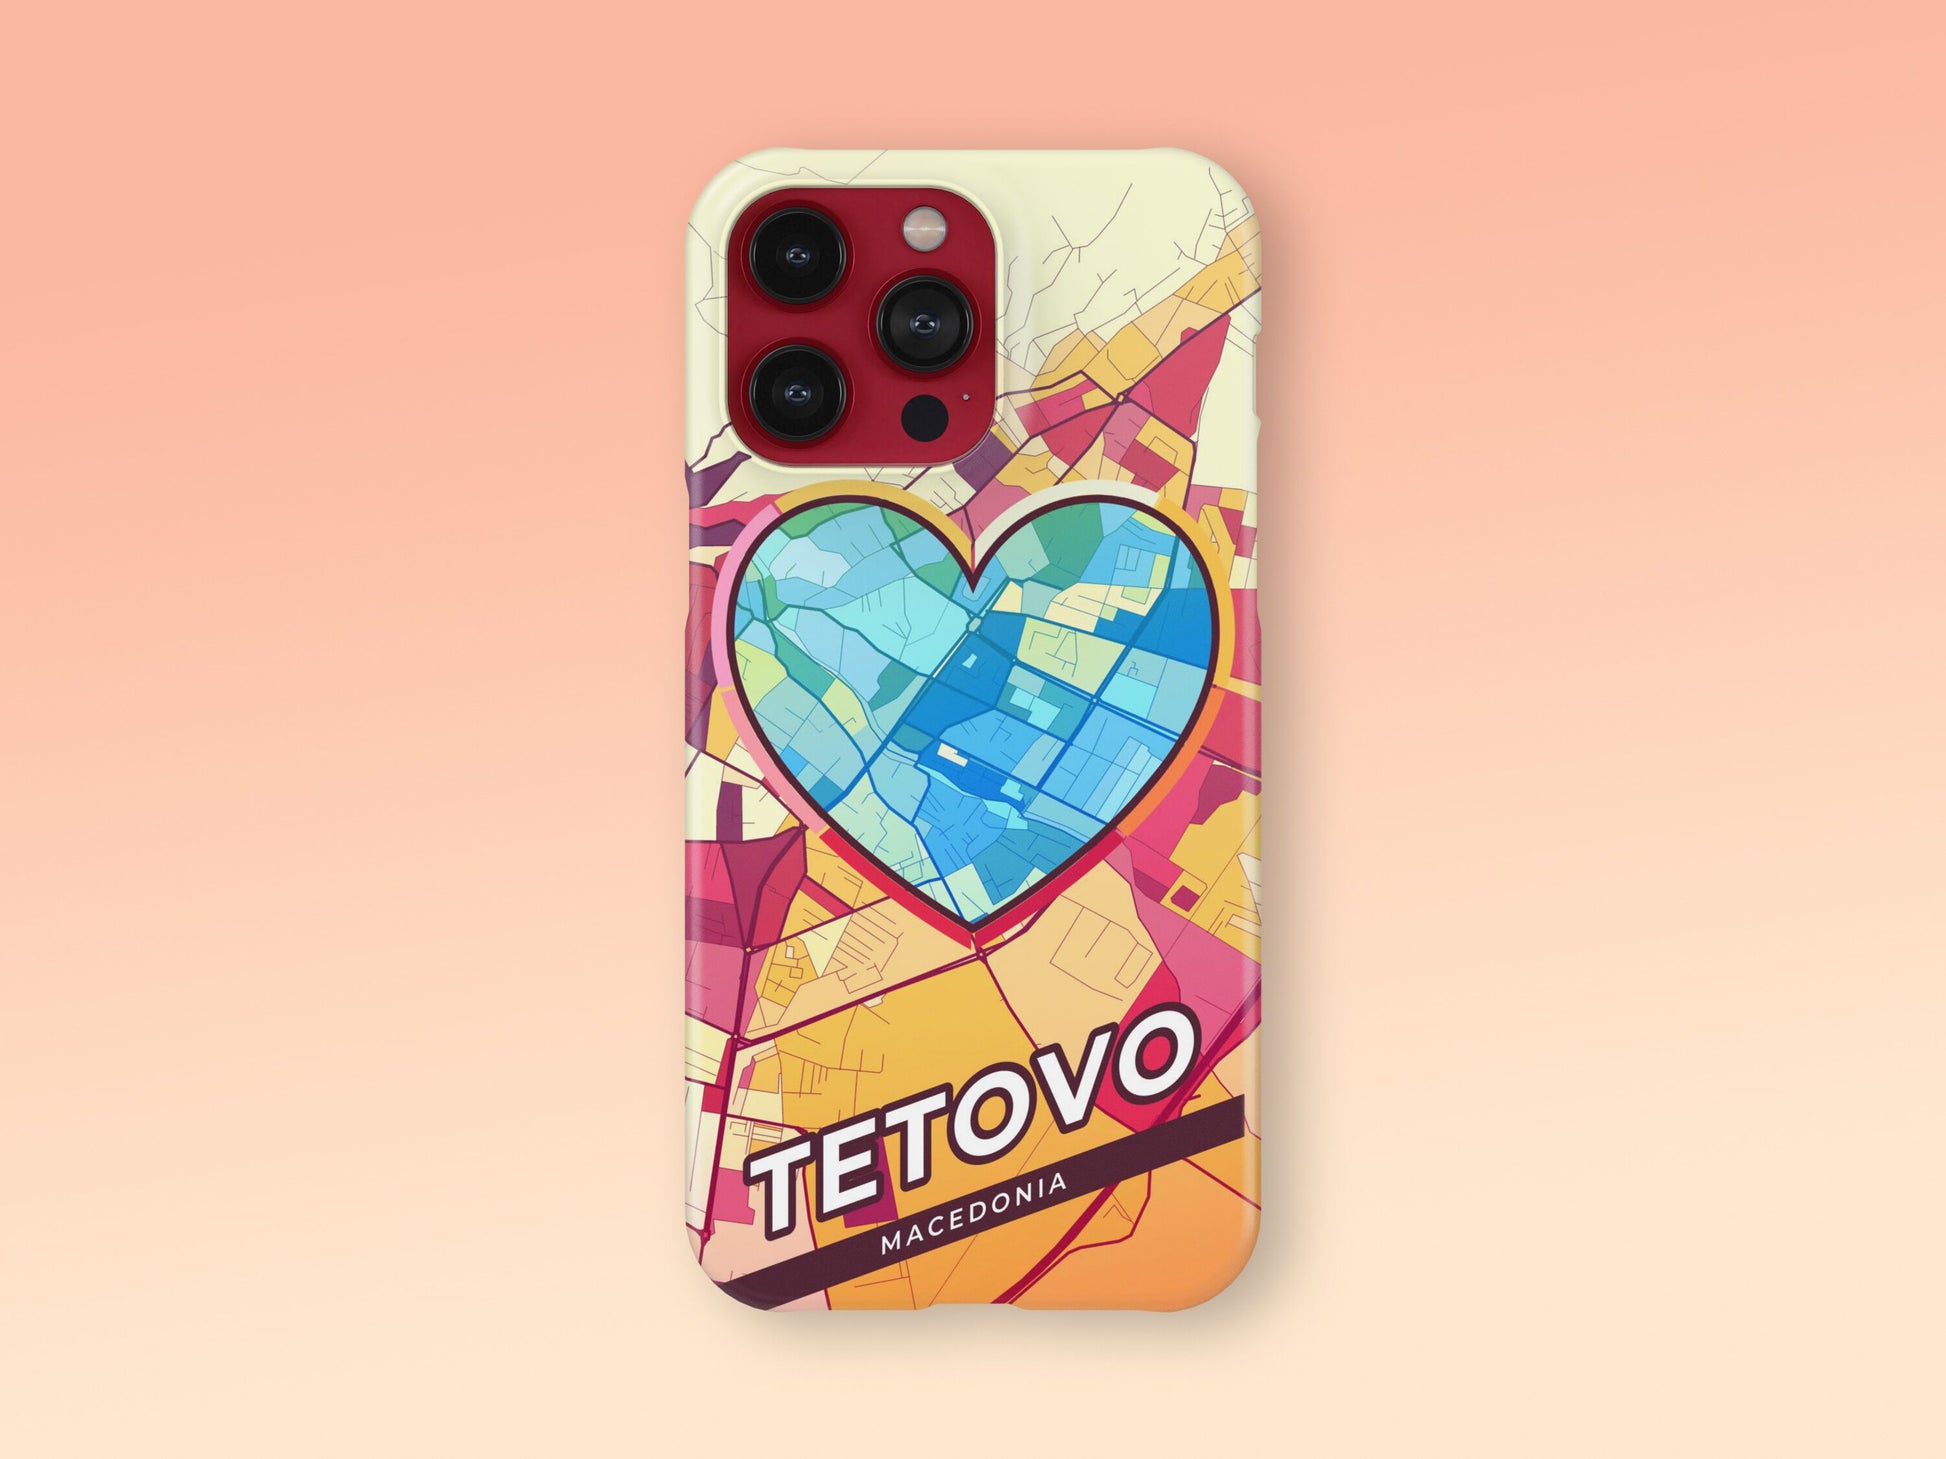 Tetovo North Macedonia slim phone case with colorful icon 2